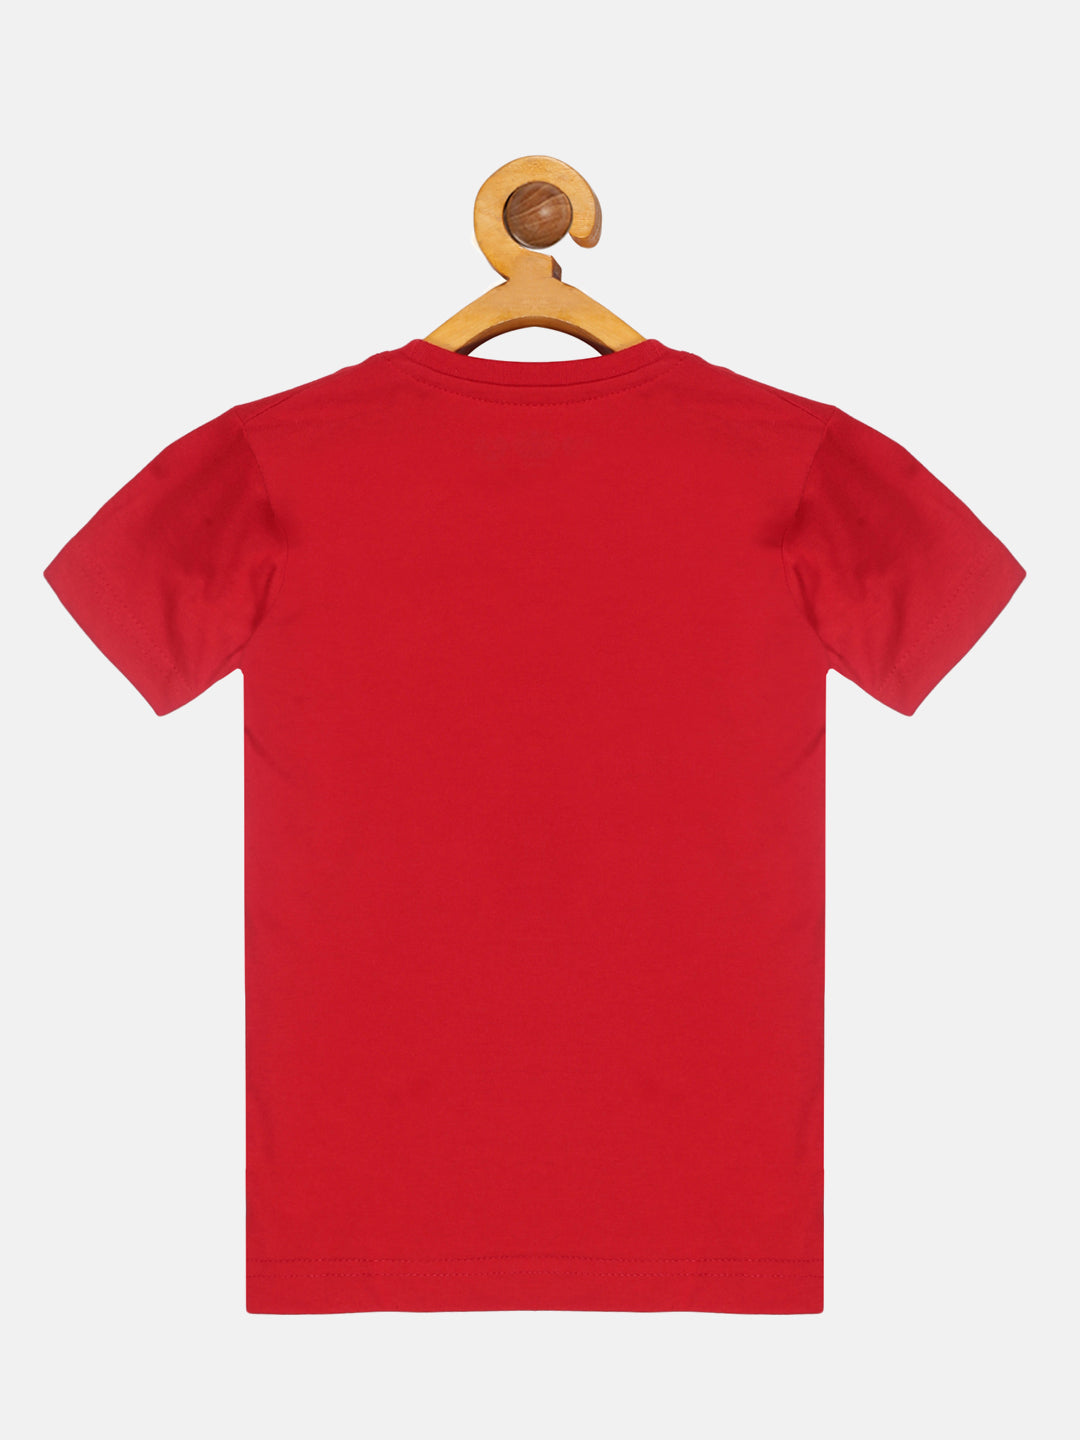 Kids Printed round neck red tshirt